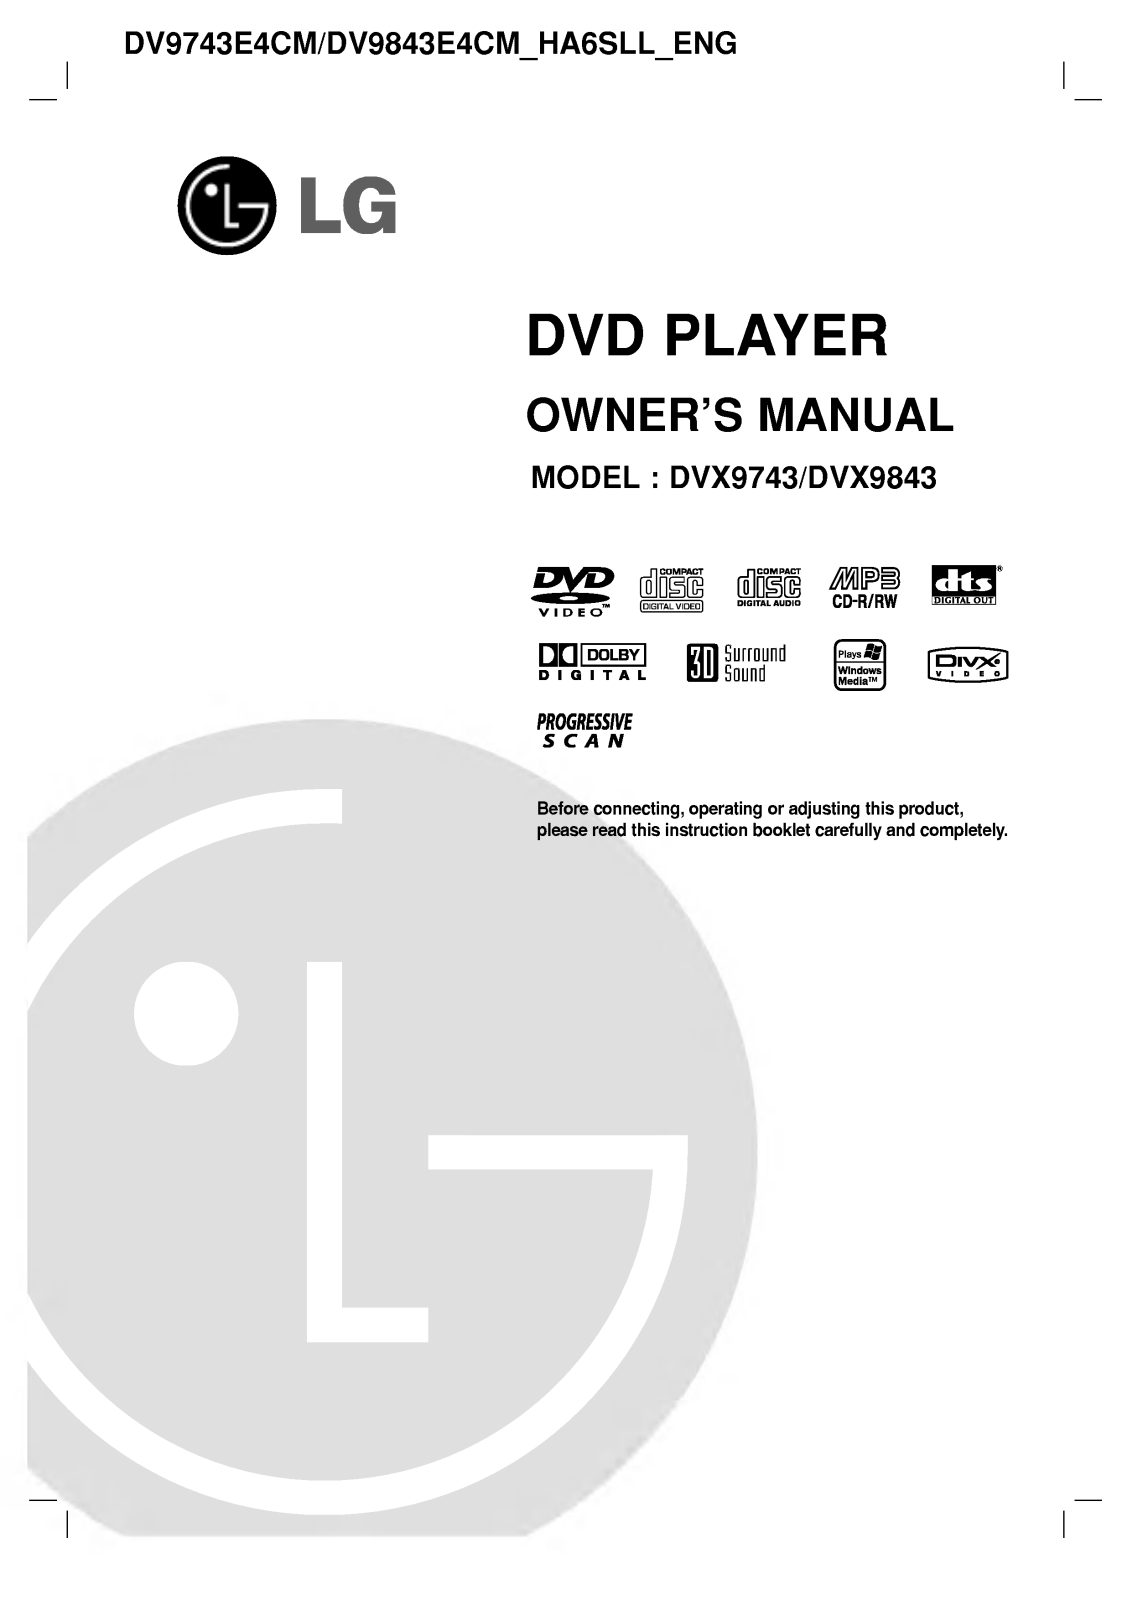 LG DV9743CE4M User Manual